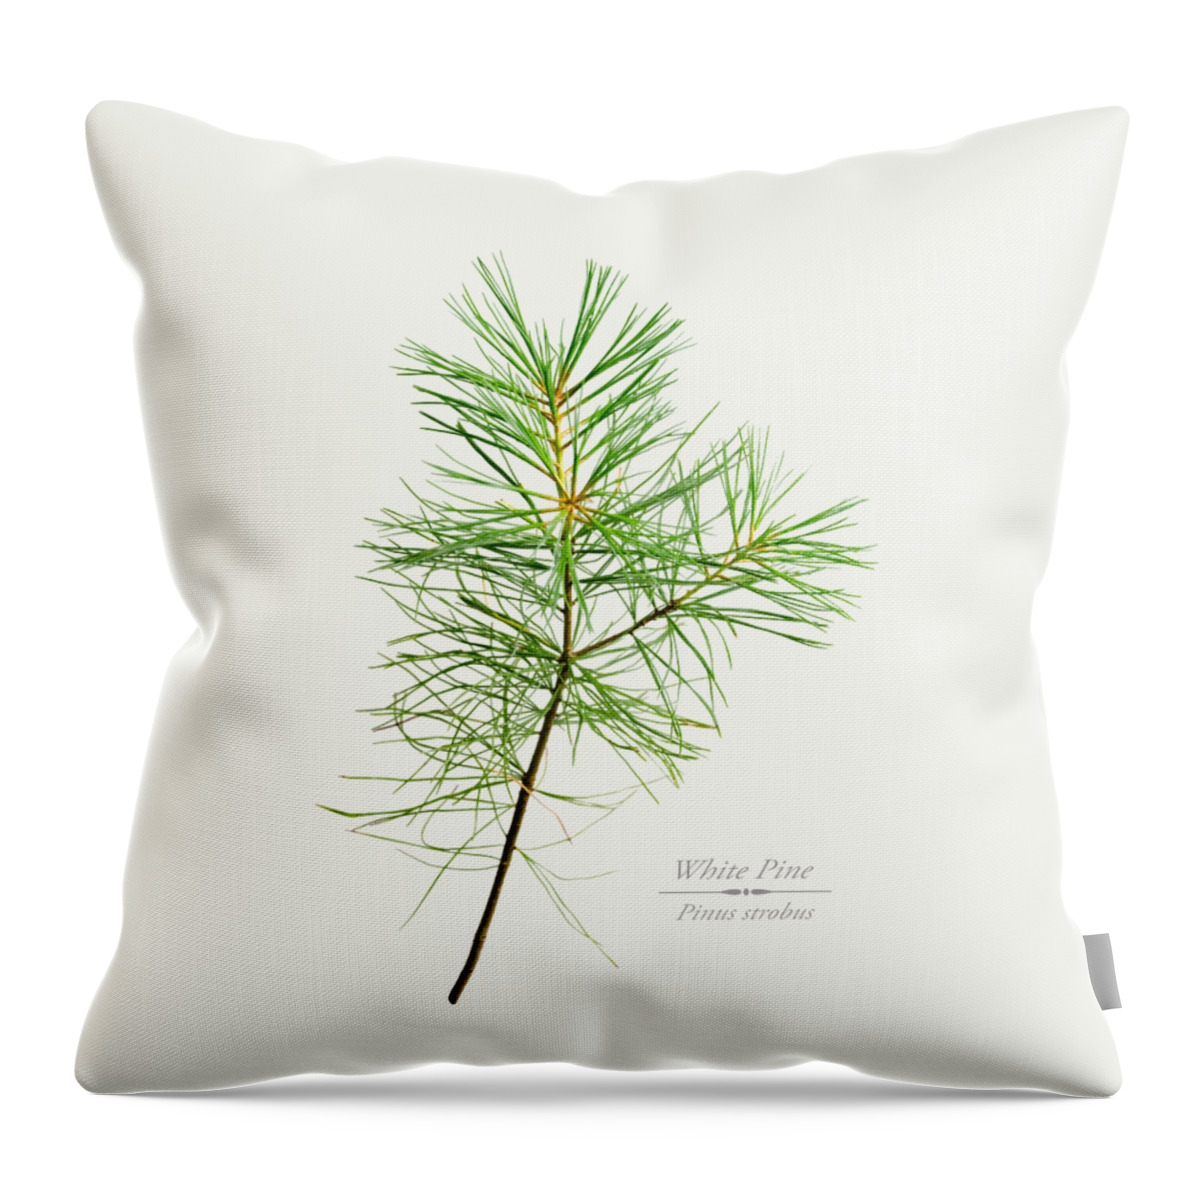 White Pine Throw Pillow featuring the mixed media White Pine by Christina Rollo